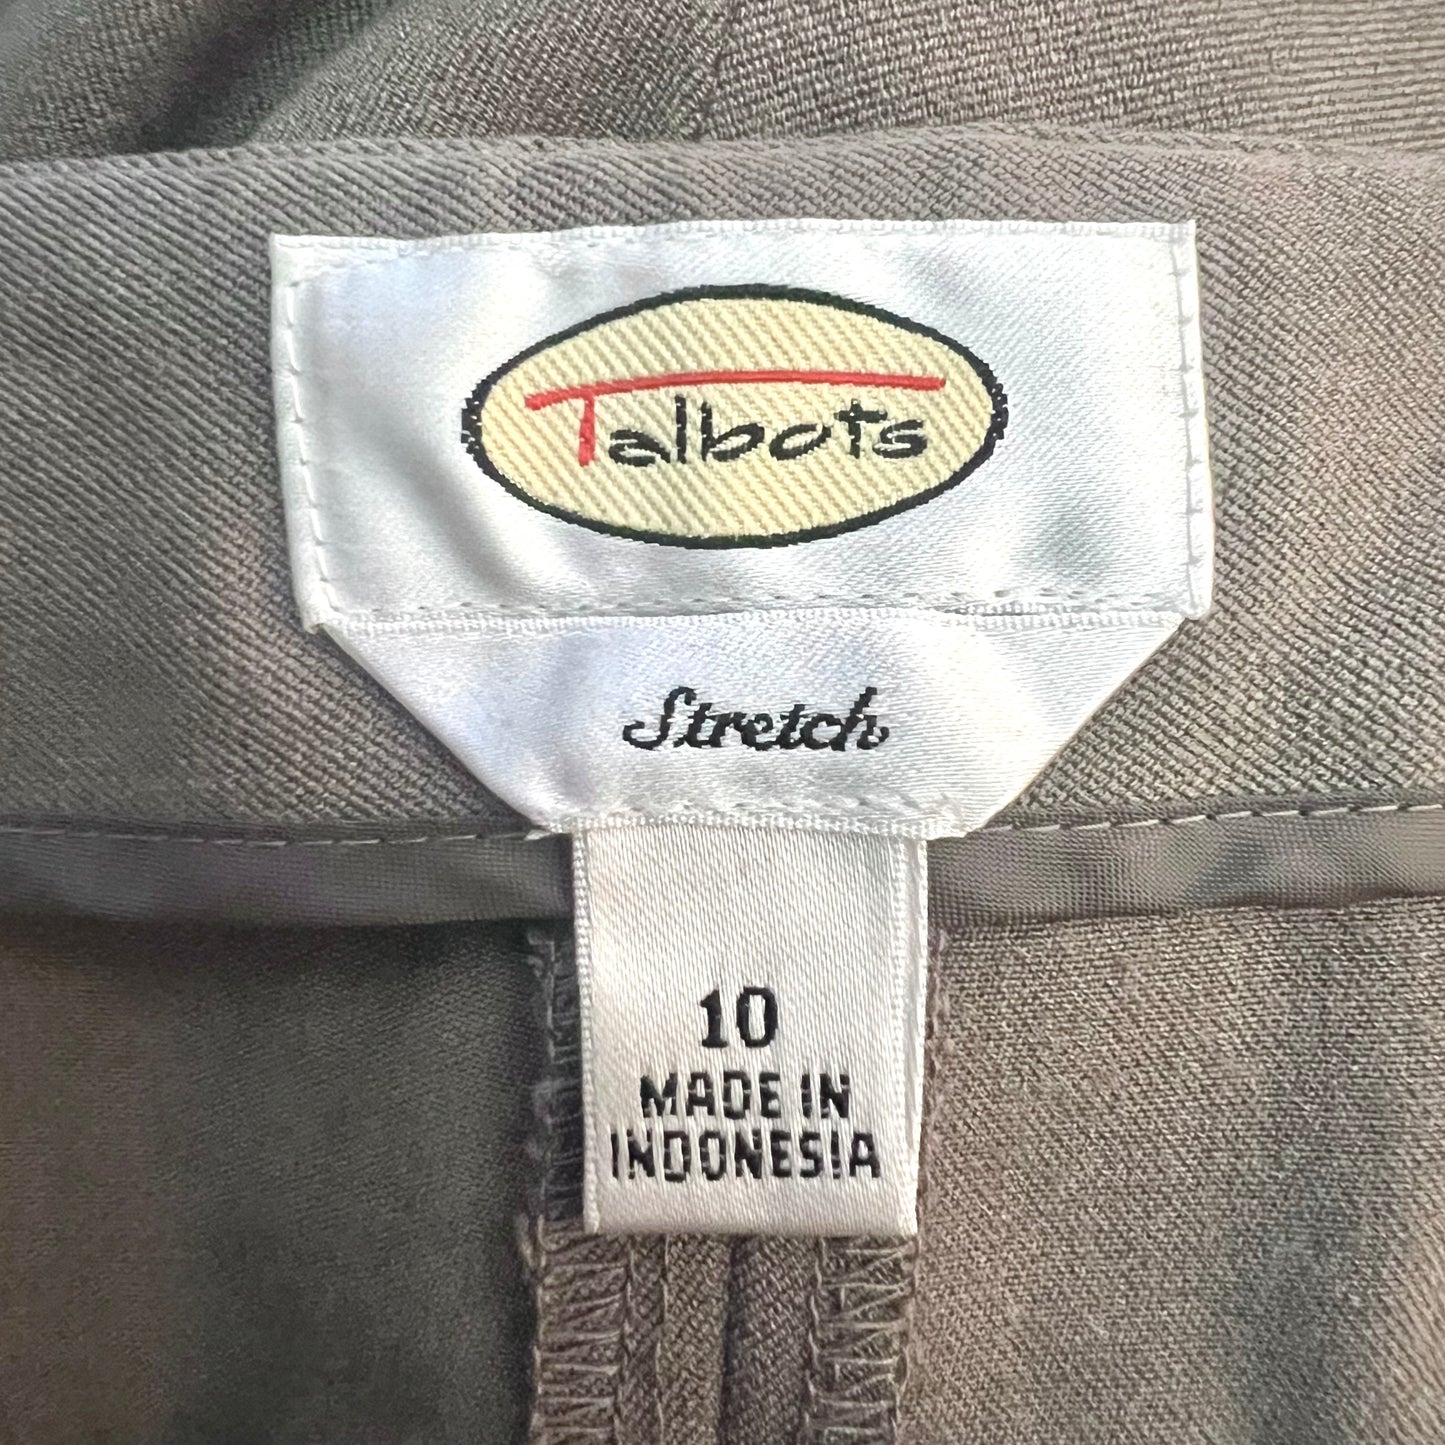 Pants Work/dress By Talbots  Size: 10